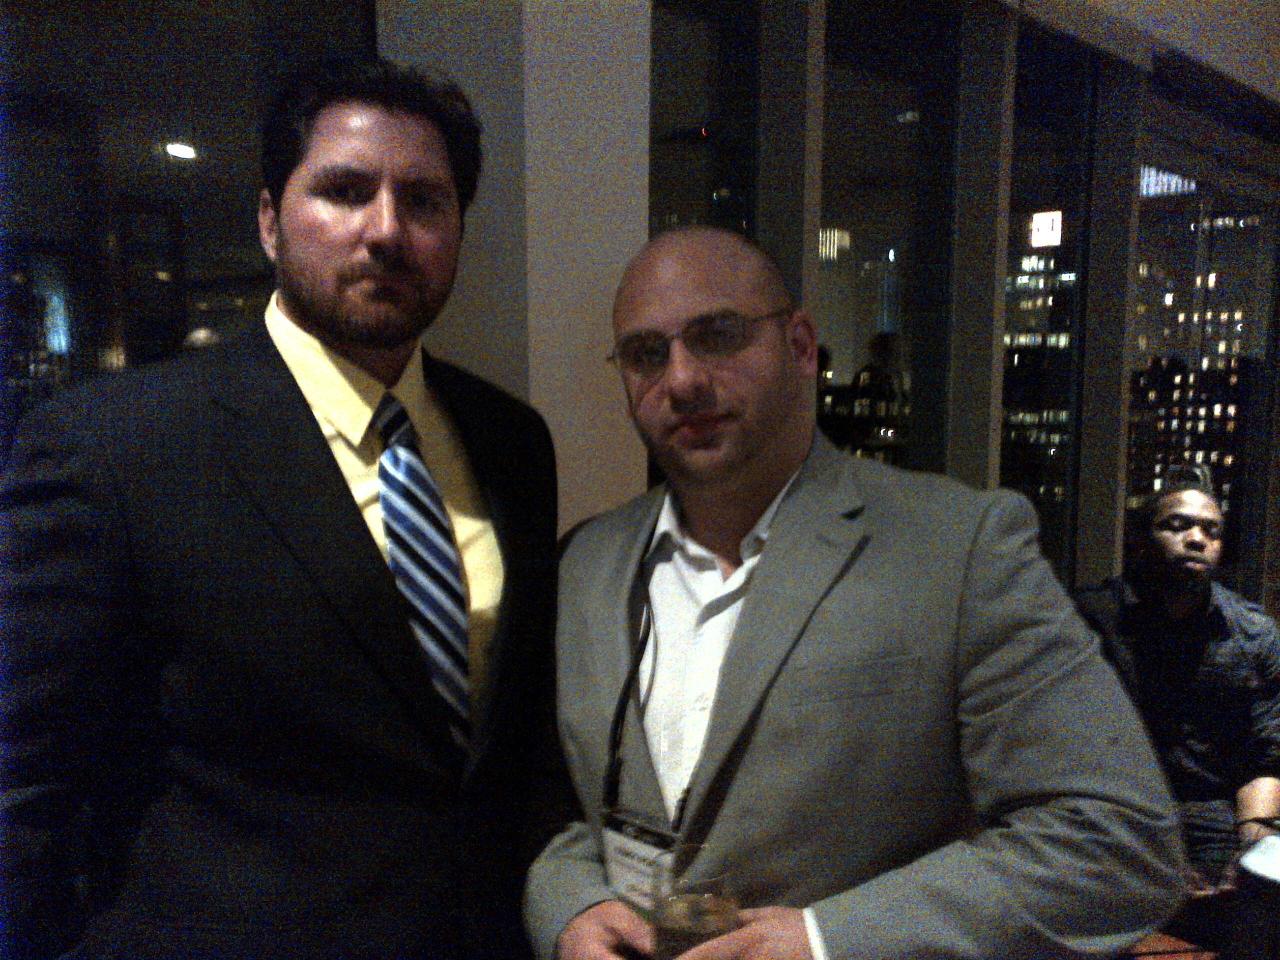 Cory Poccia and Matt Hynes at the NYC Entrepreneurs' Organization Gala